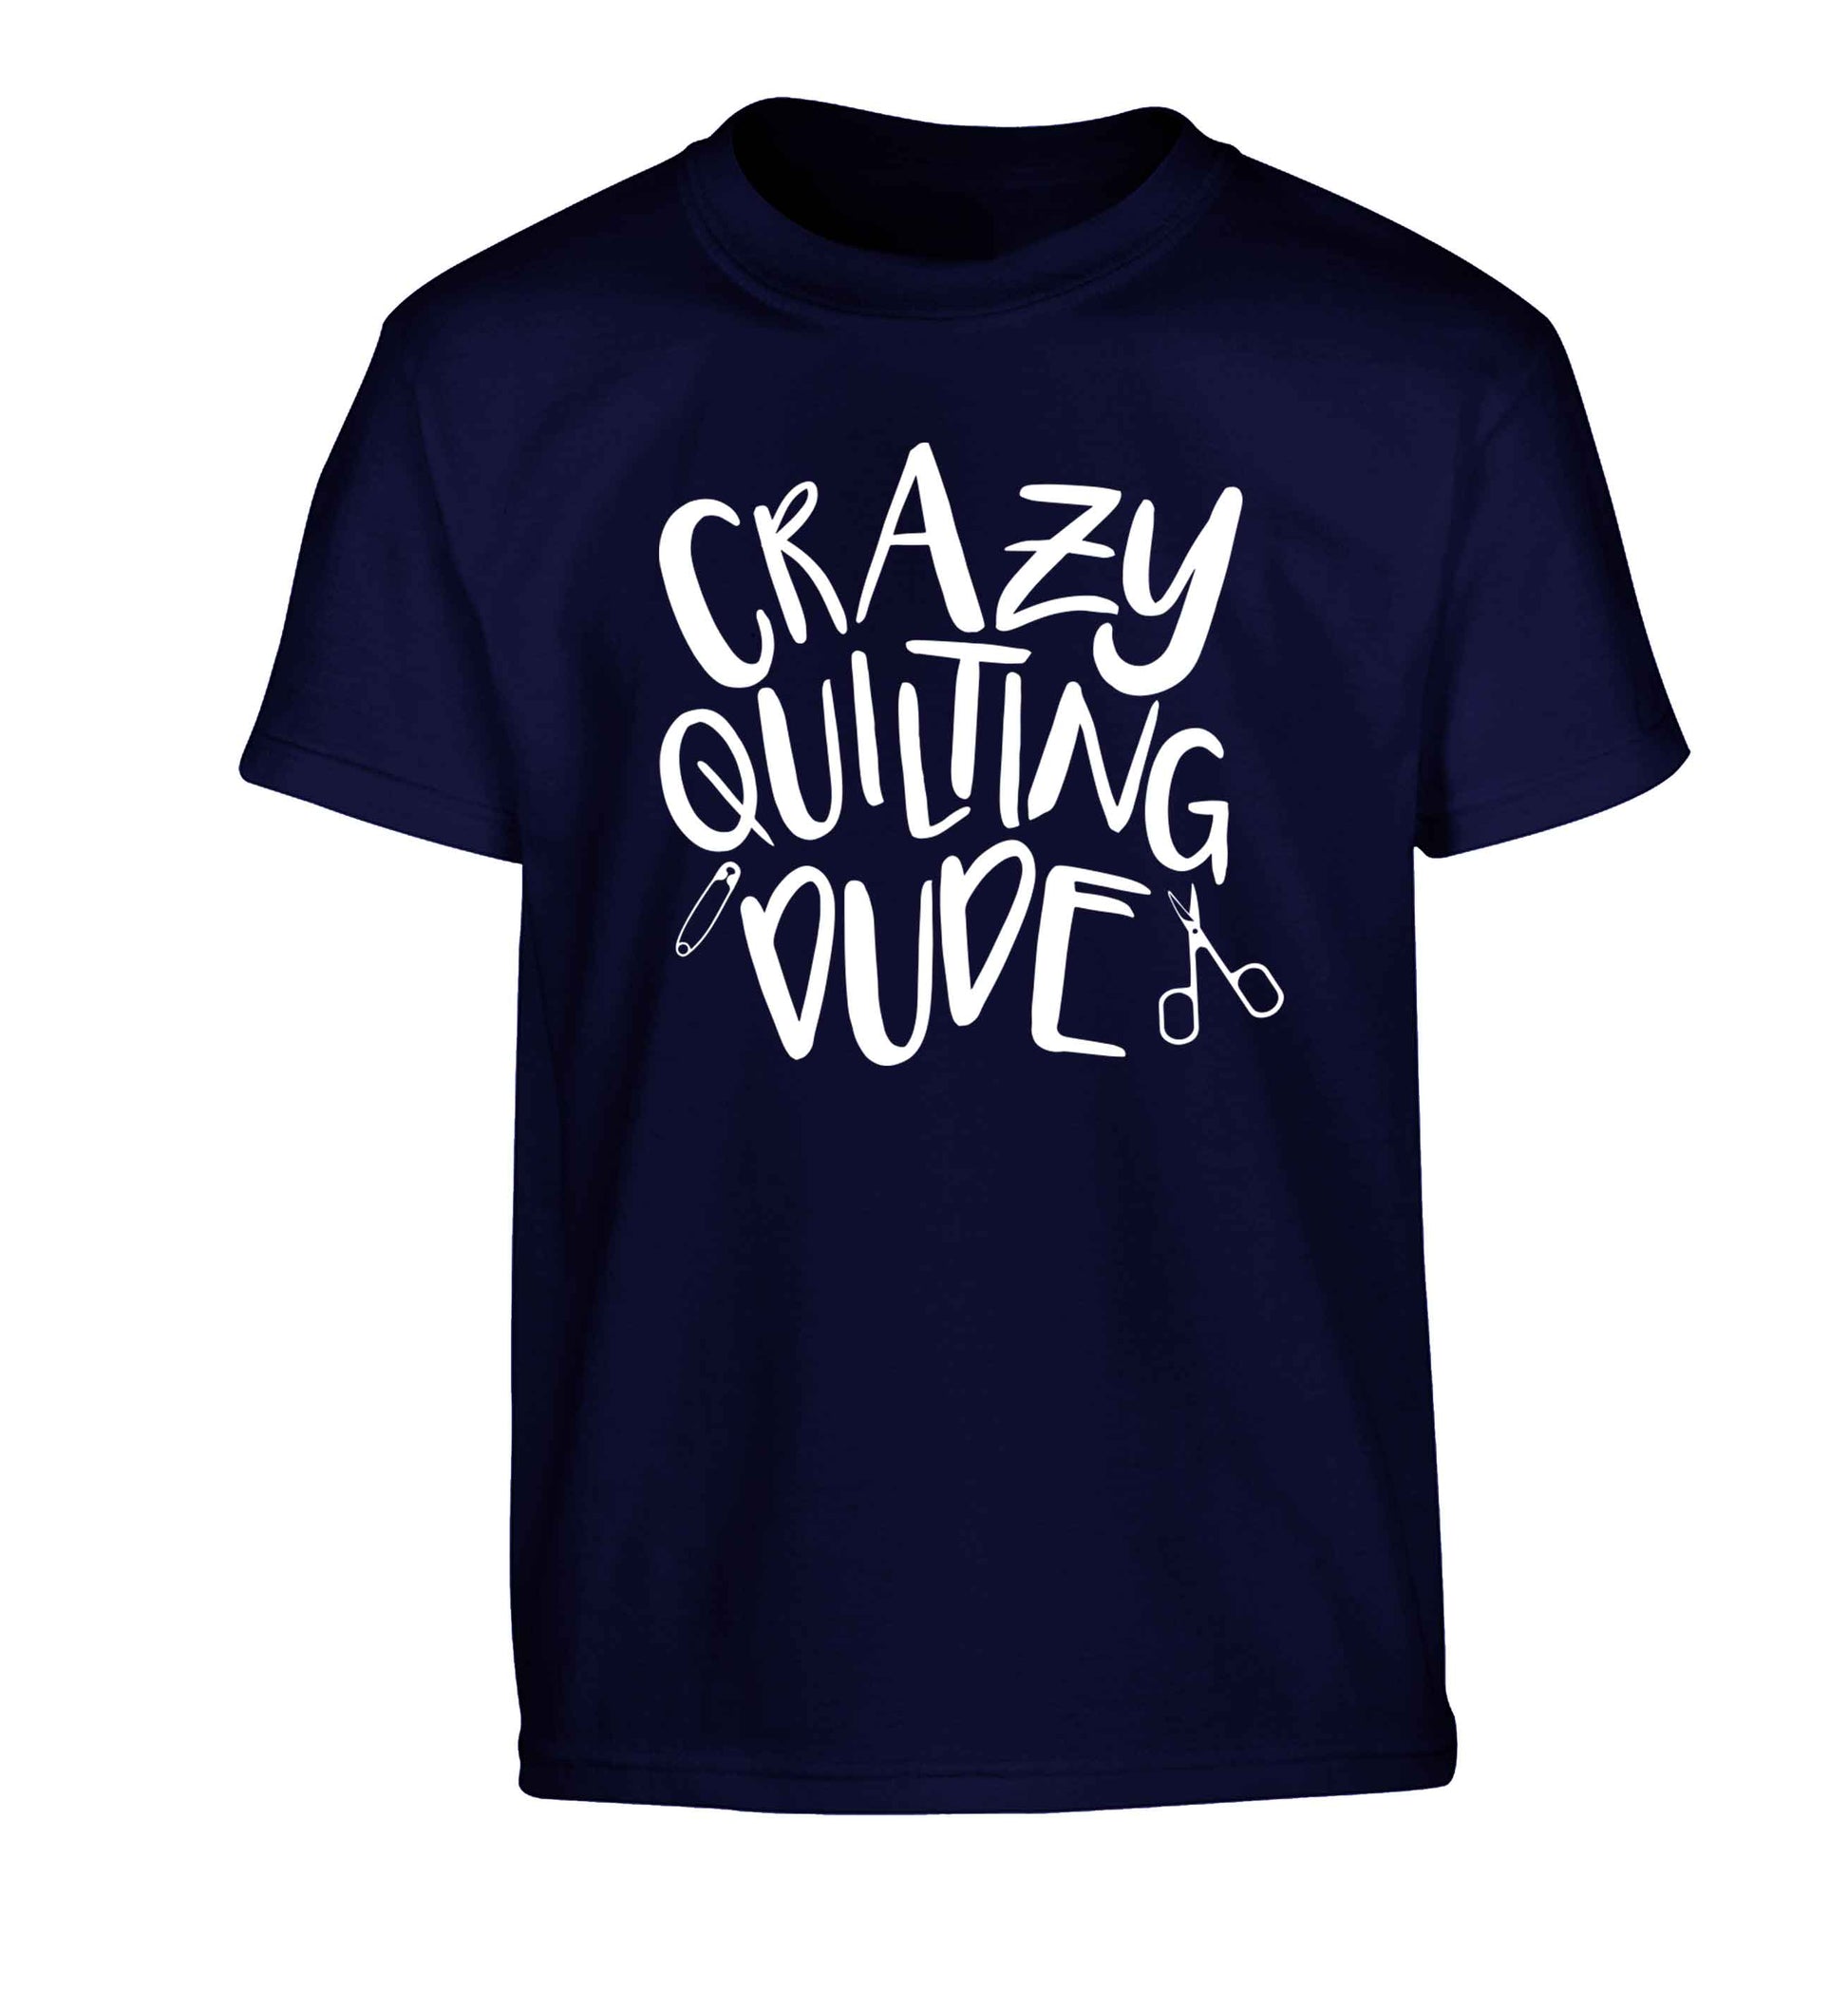 Crazy quilting dude Children's navy Tshirt 12-13 Years